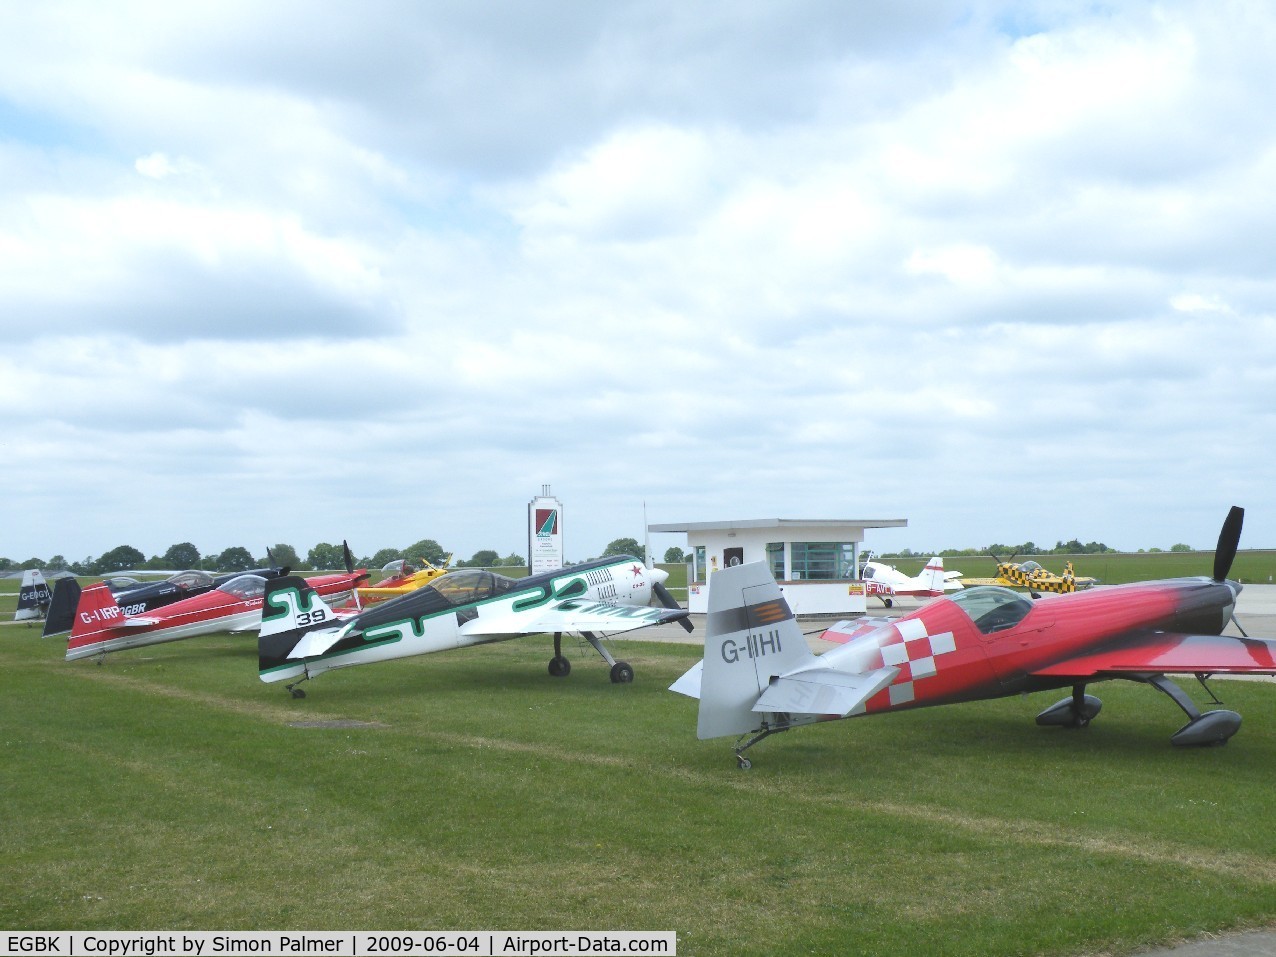 Sywell Aerodrome Airport, Northampton, England United Kingdom (EGBK) - Aerobatic aircraft at Sywell